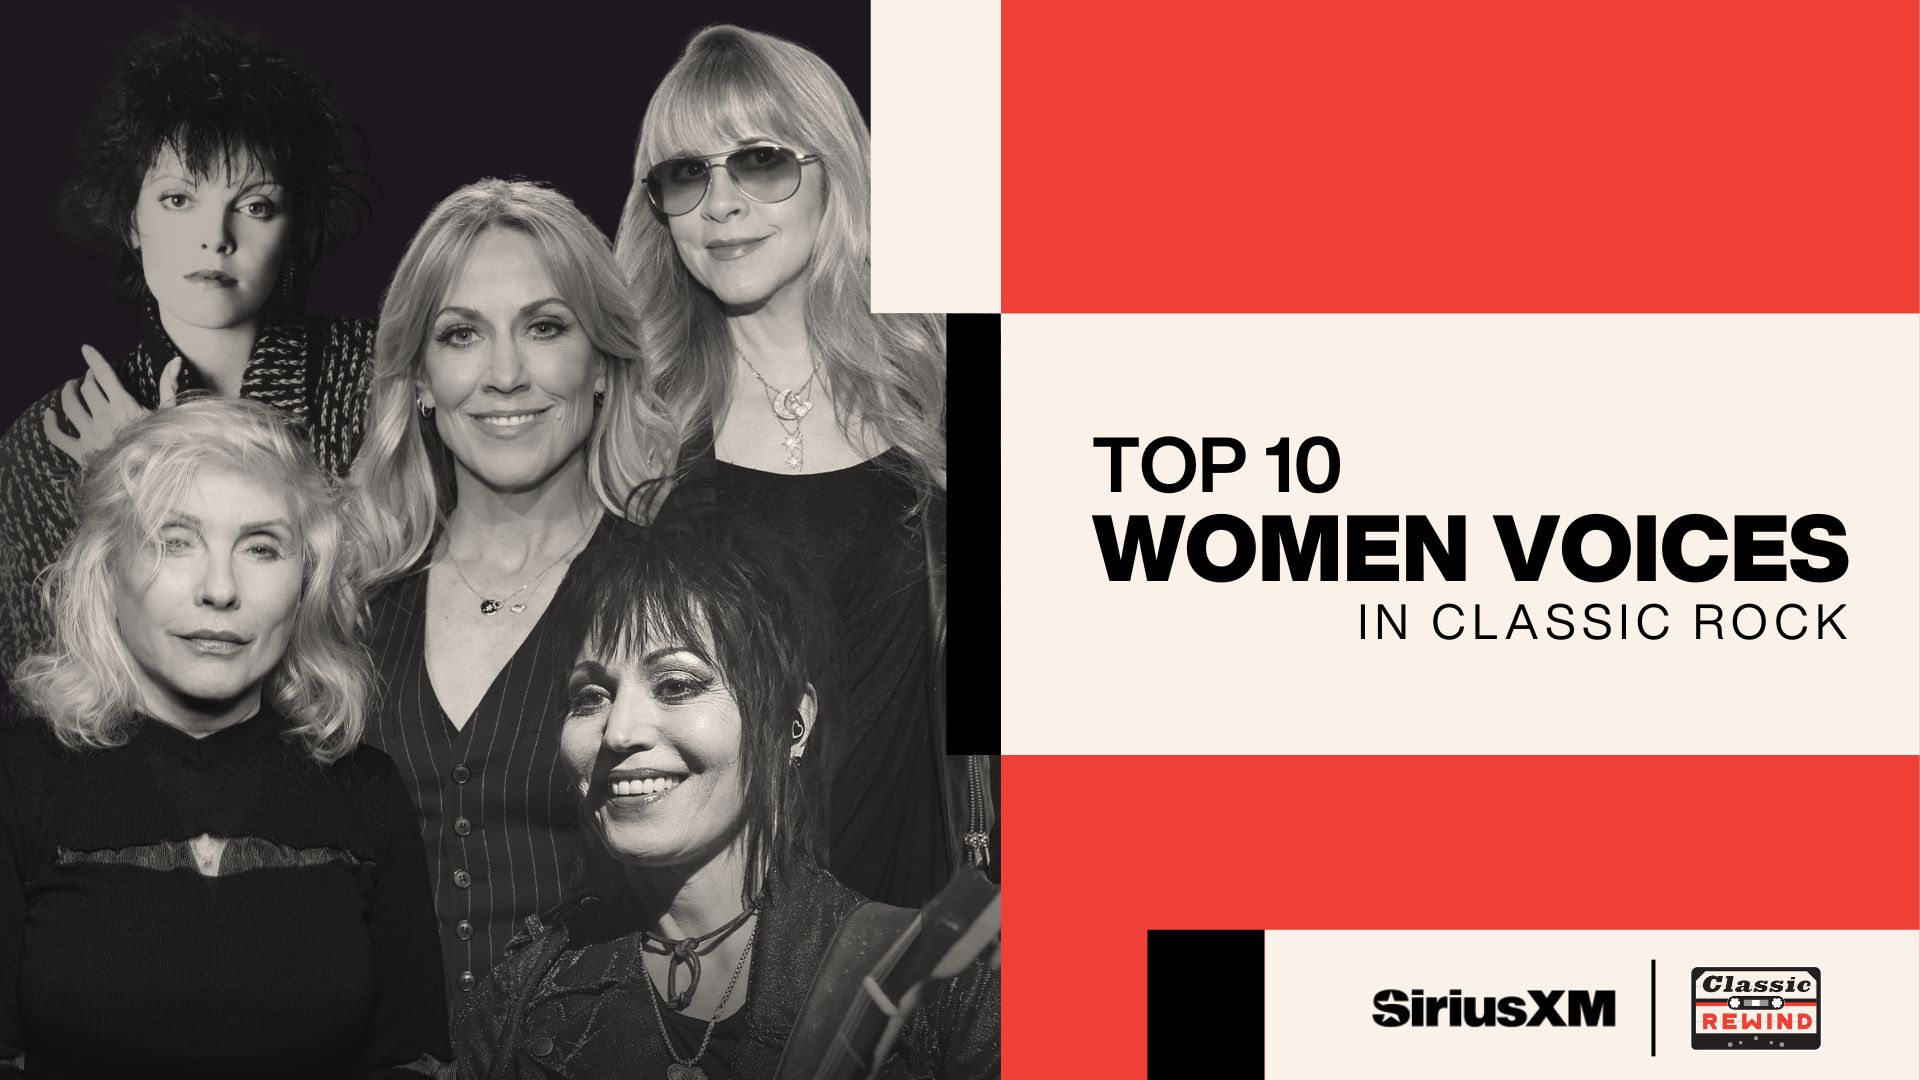 SiriusXM Classic Rewind Top 10 Women Voices in Classic Rock 16x9